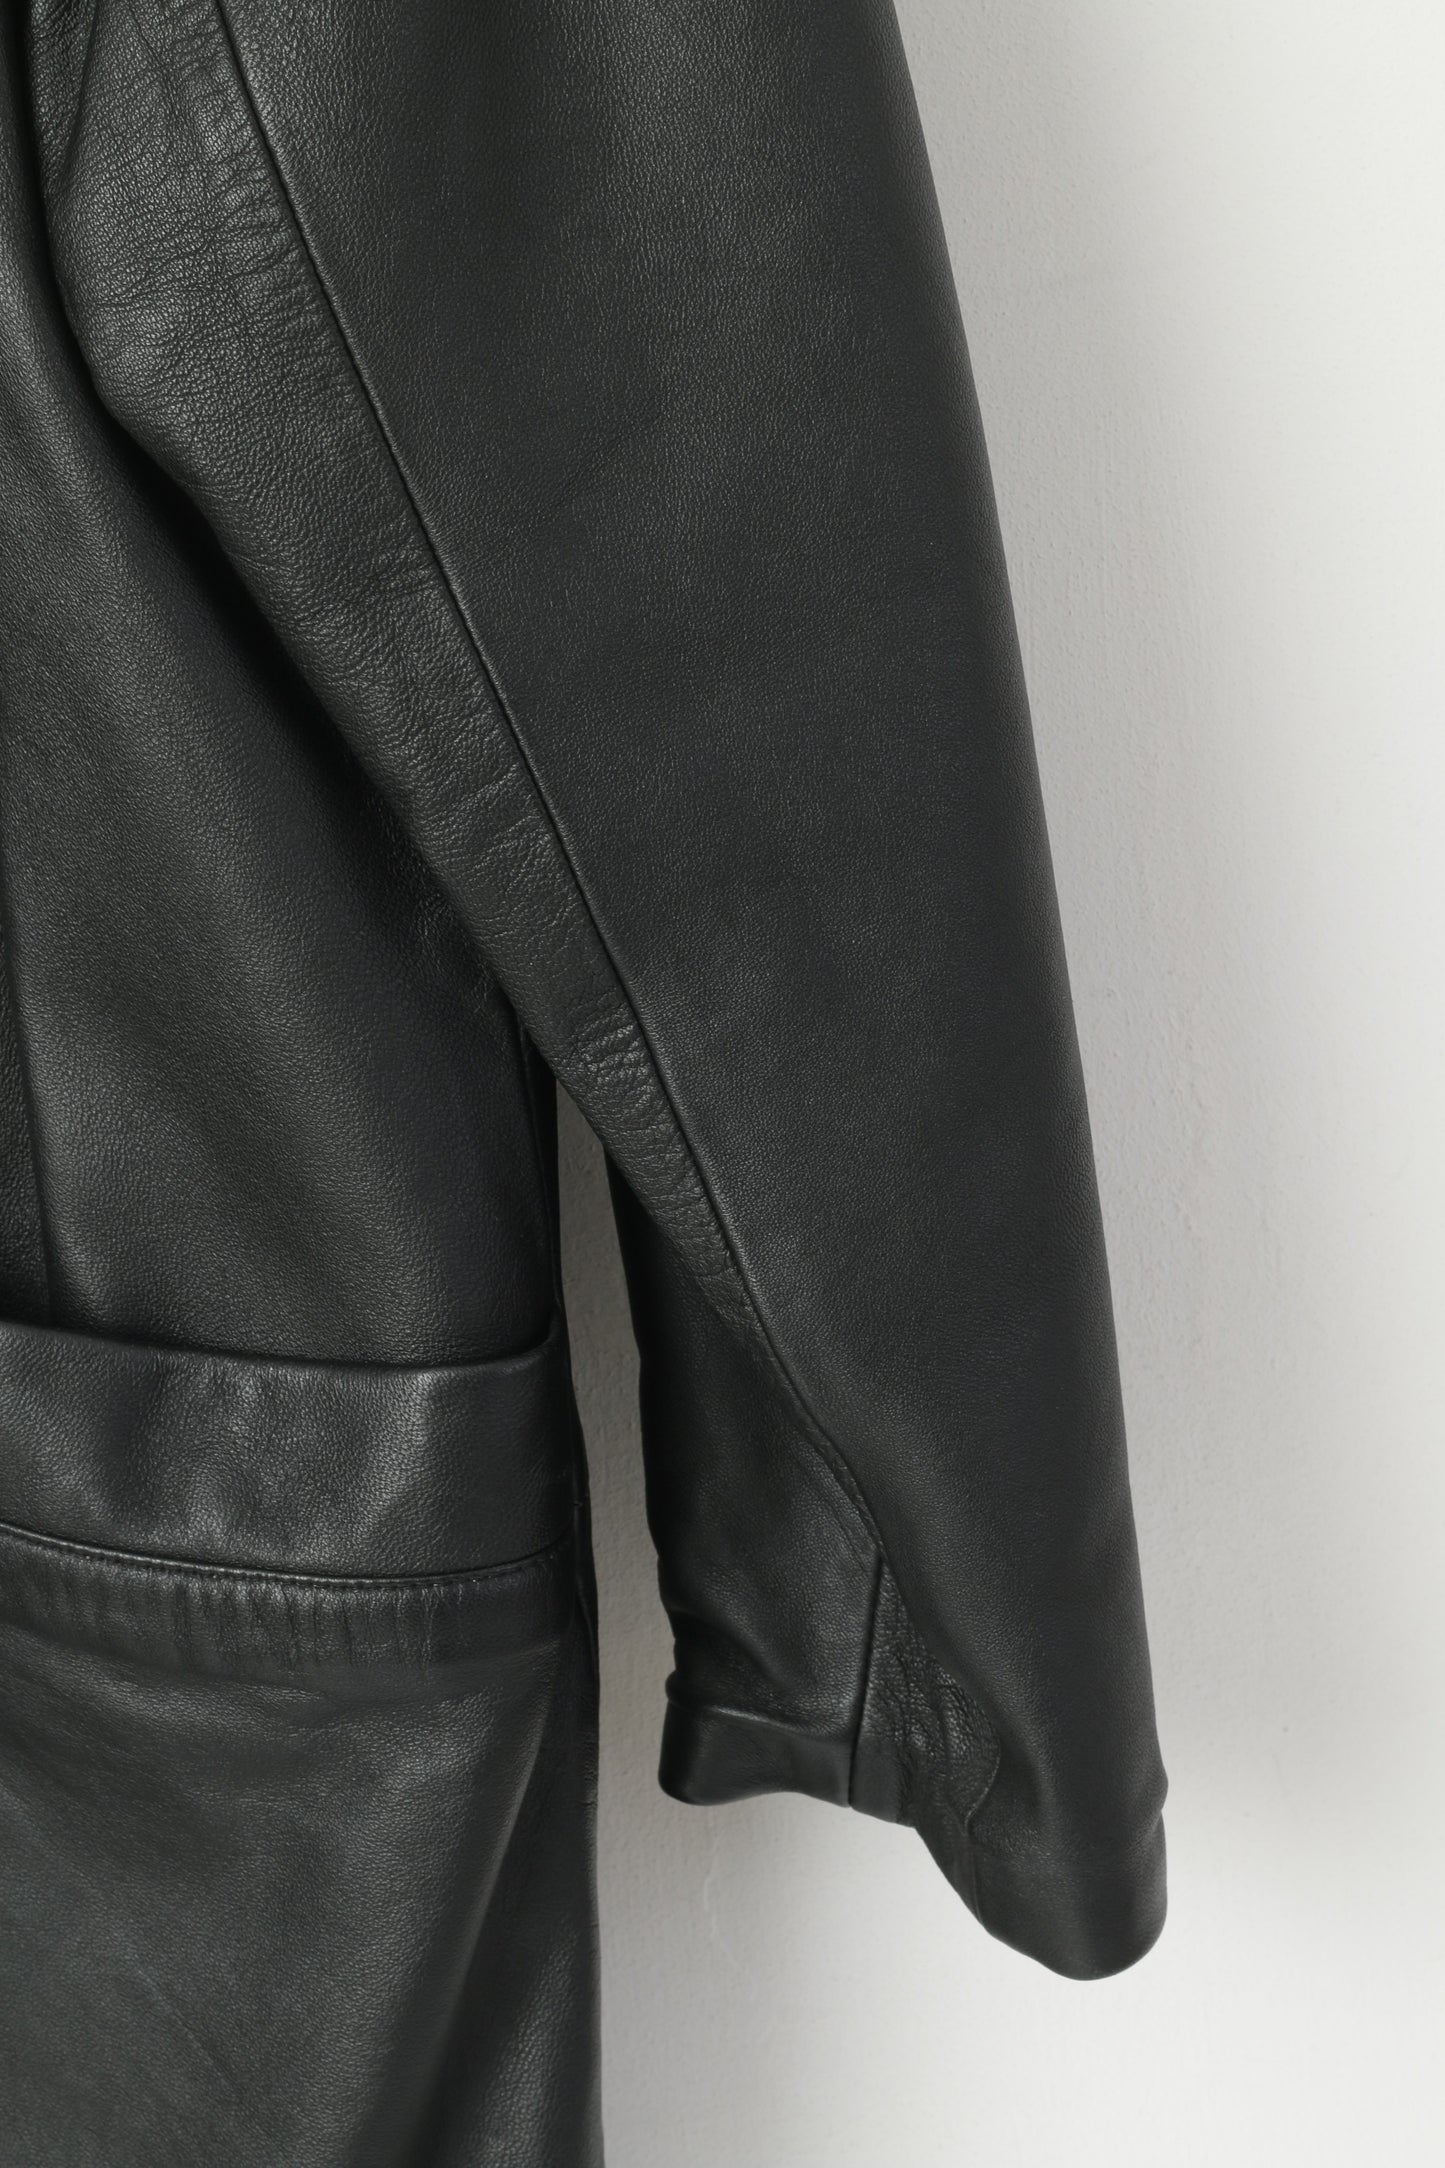 Skinny Collection Women M Jacket Black Soft Leather Vintages Shoulder Pads Retro Top